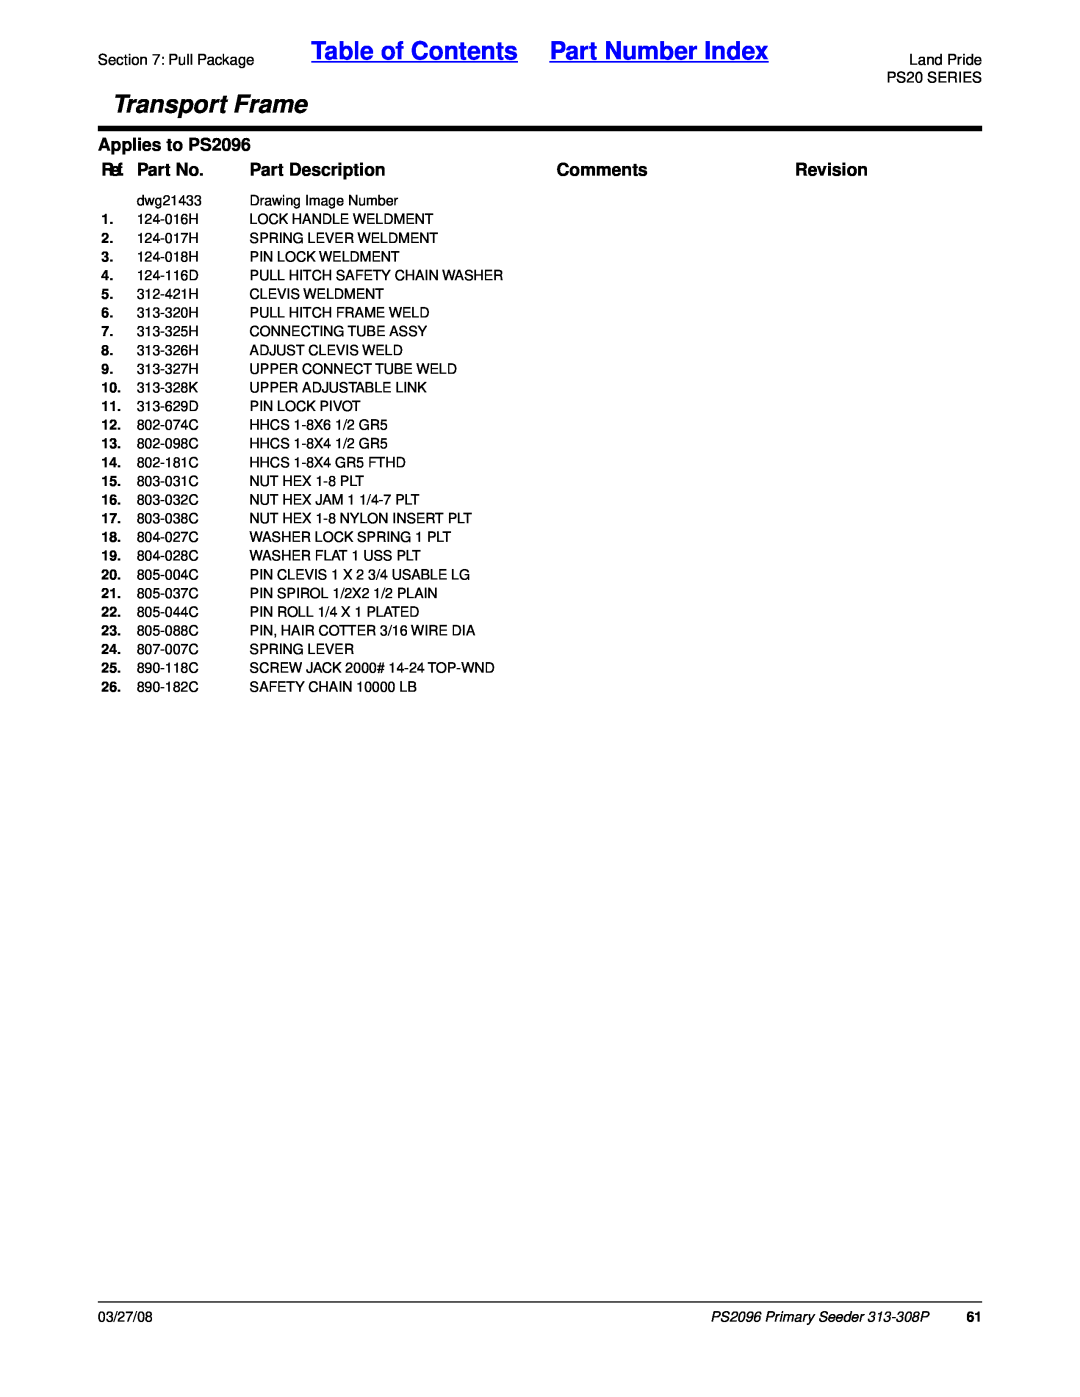 Land Pride Table of Contents Part Number Index, Transport Frame, Applies to PS2096, Ref. Part No, Part Description 